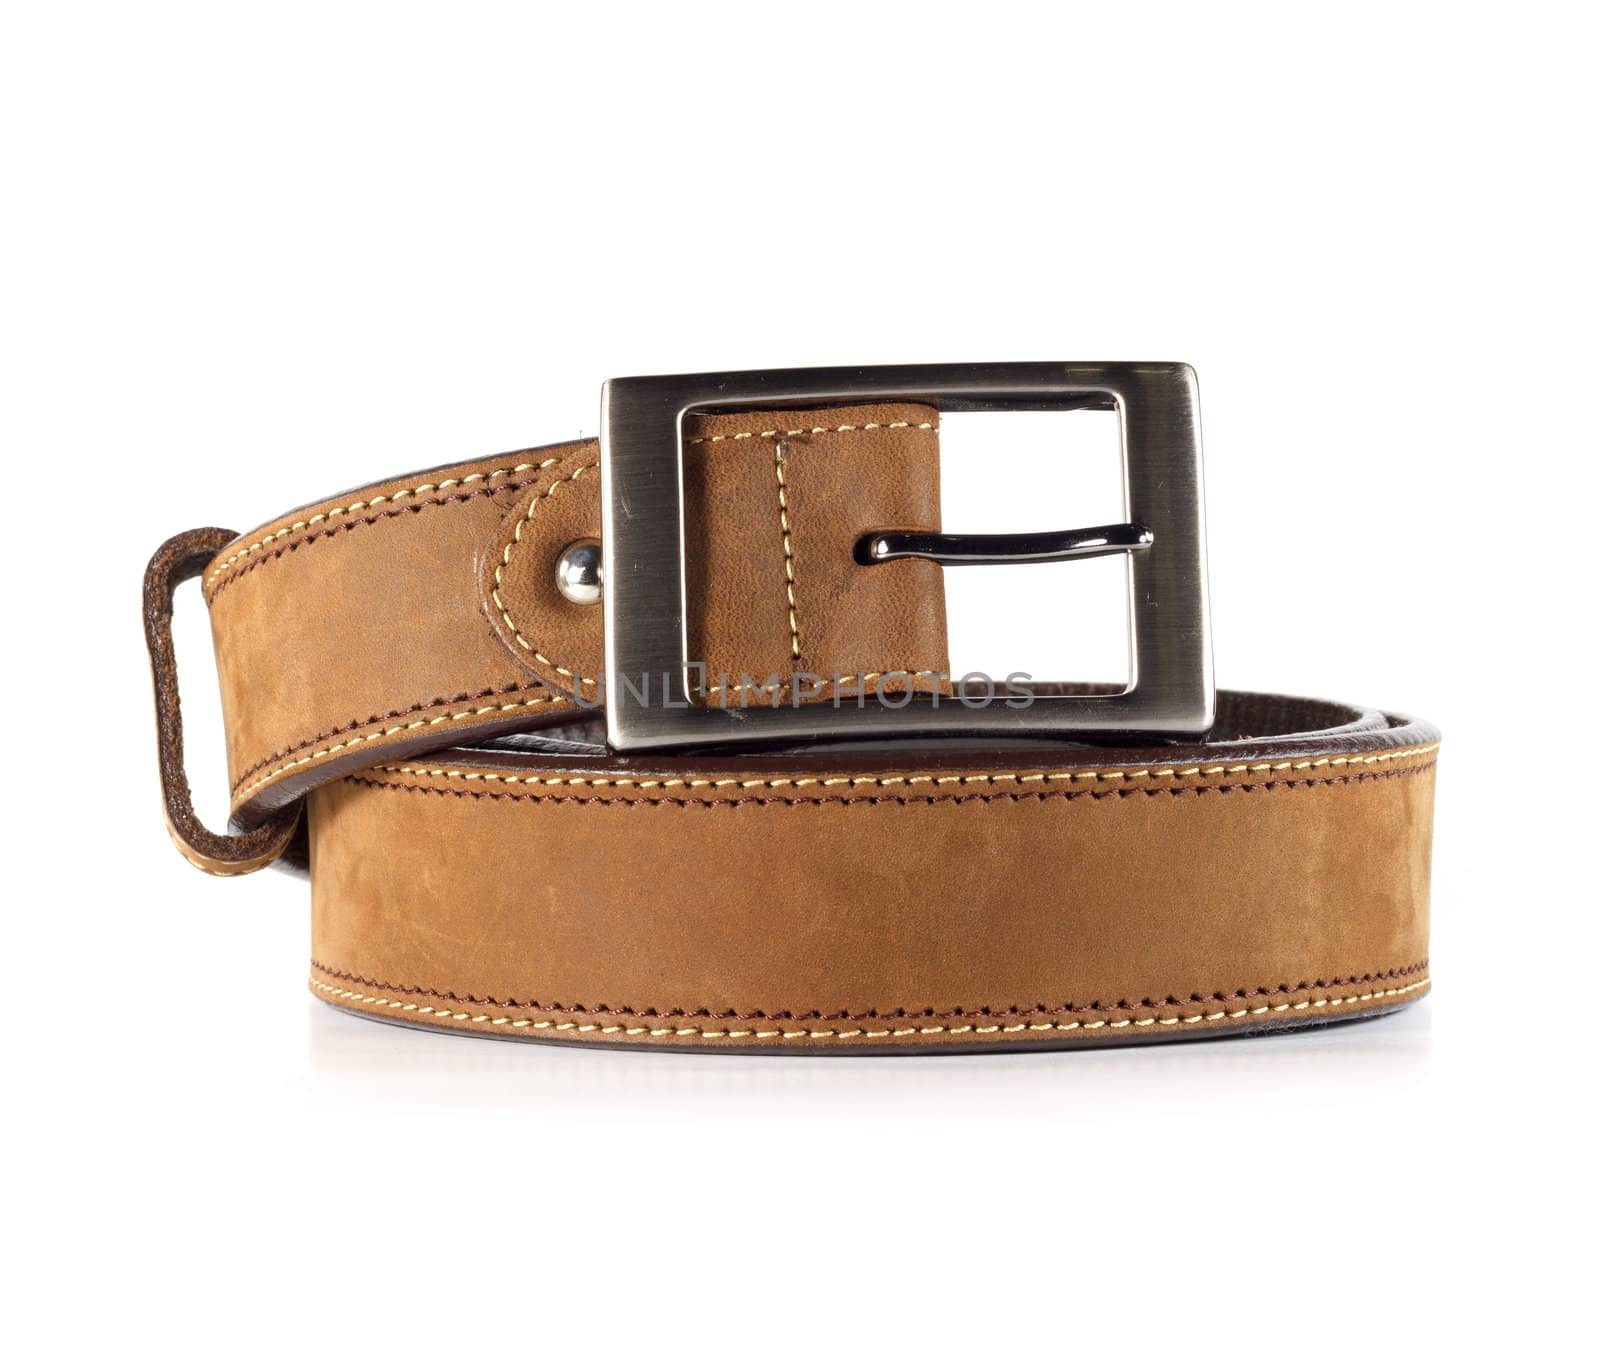 Leather belt for men on white background.